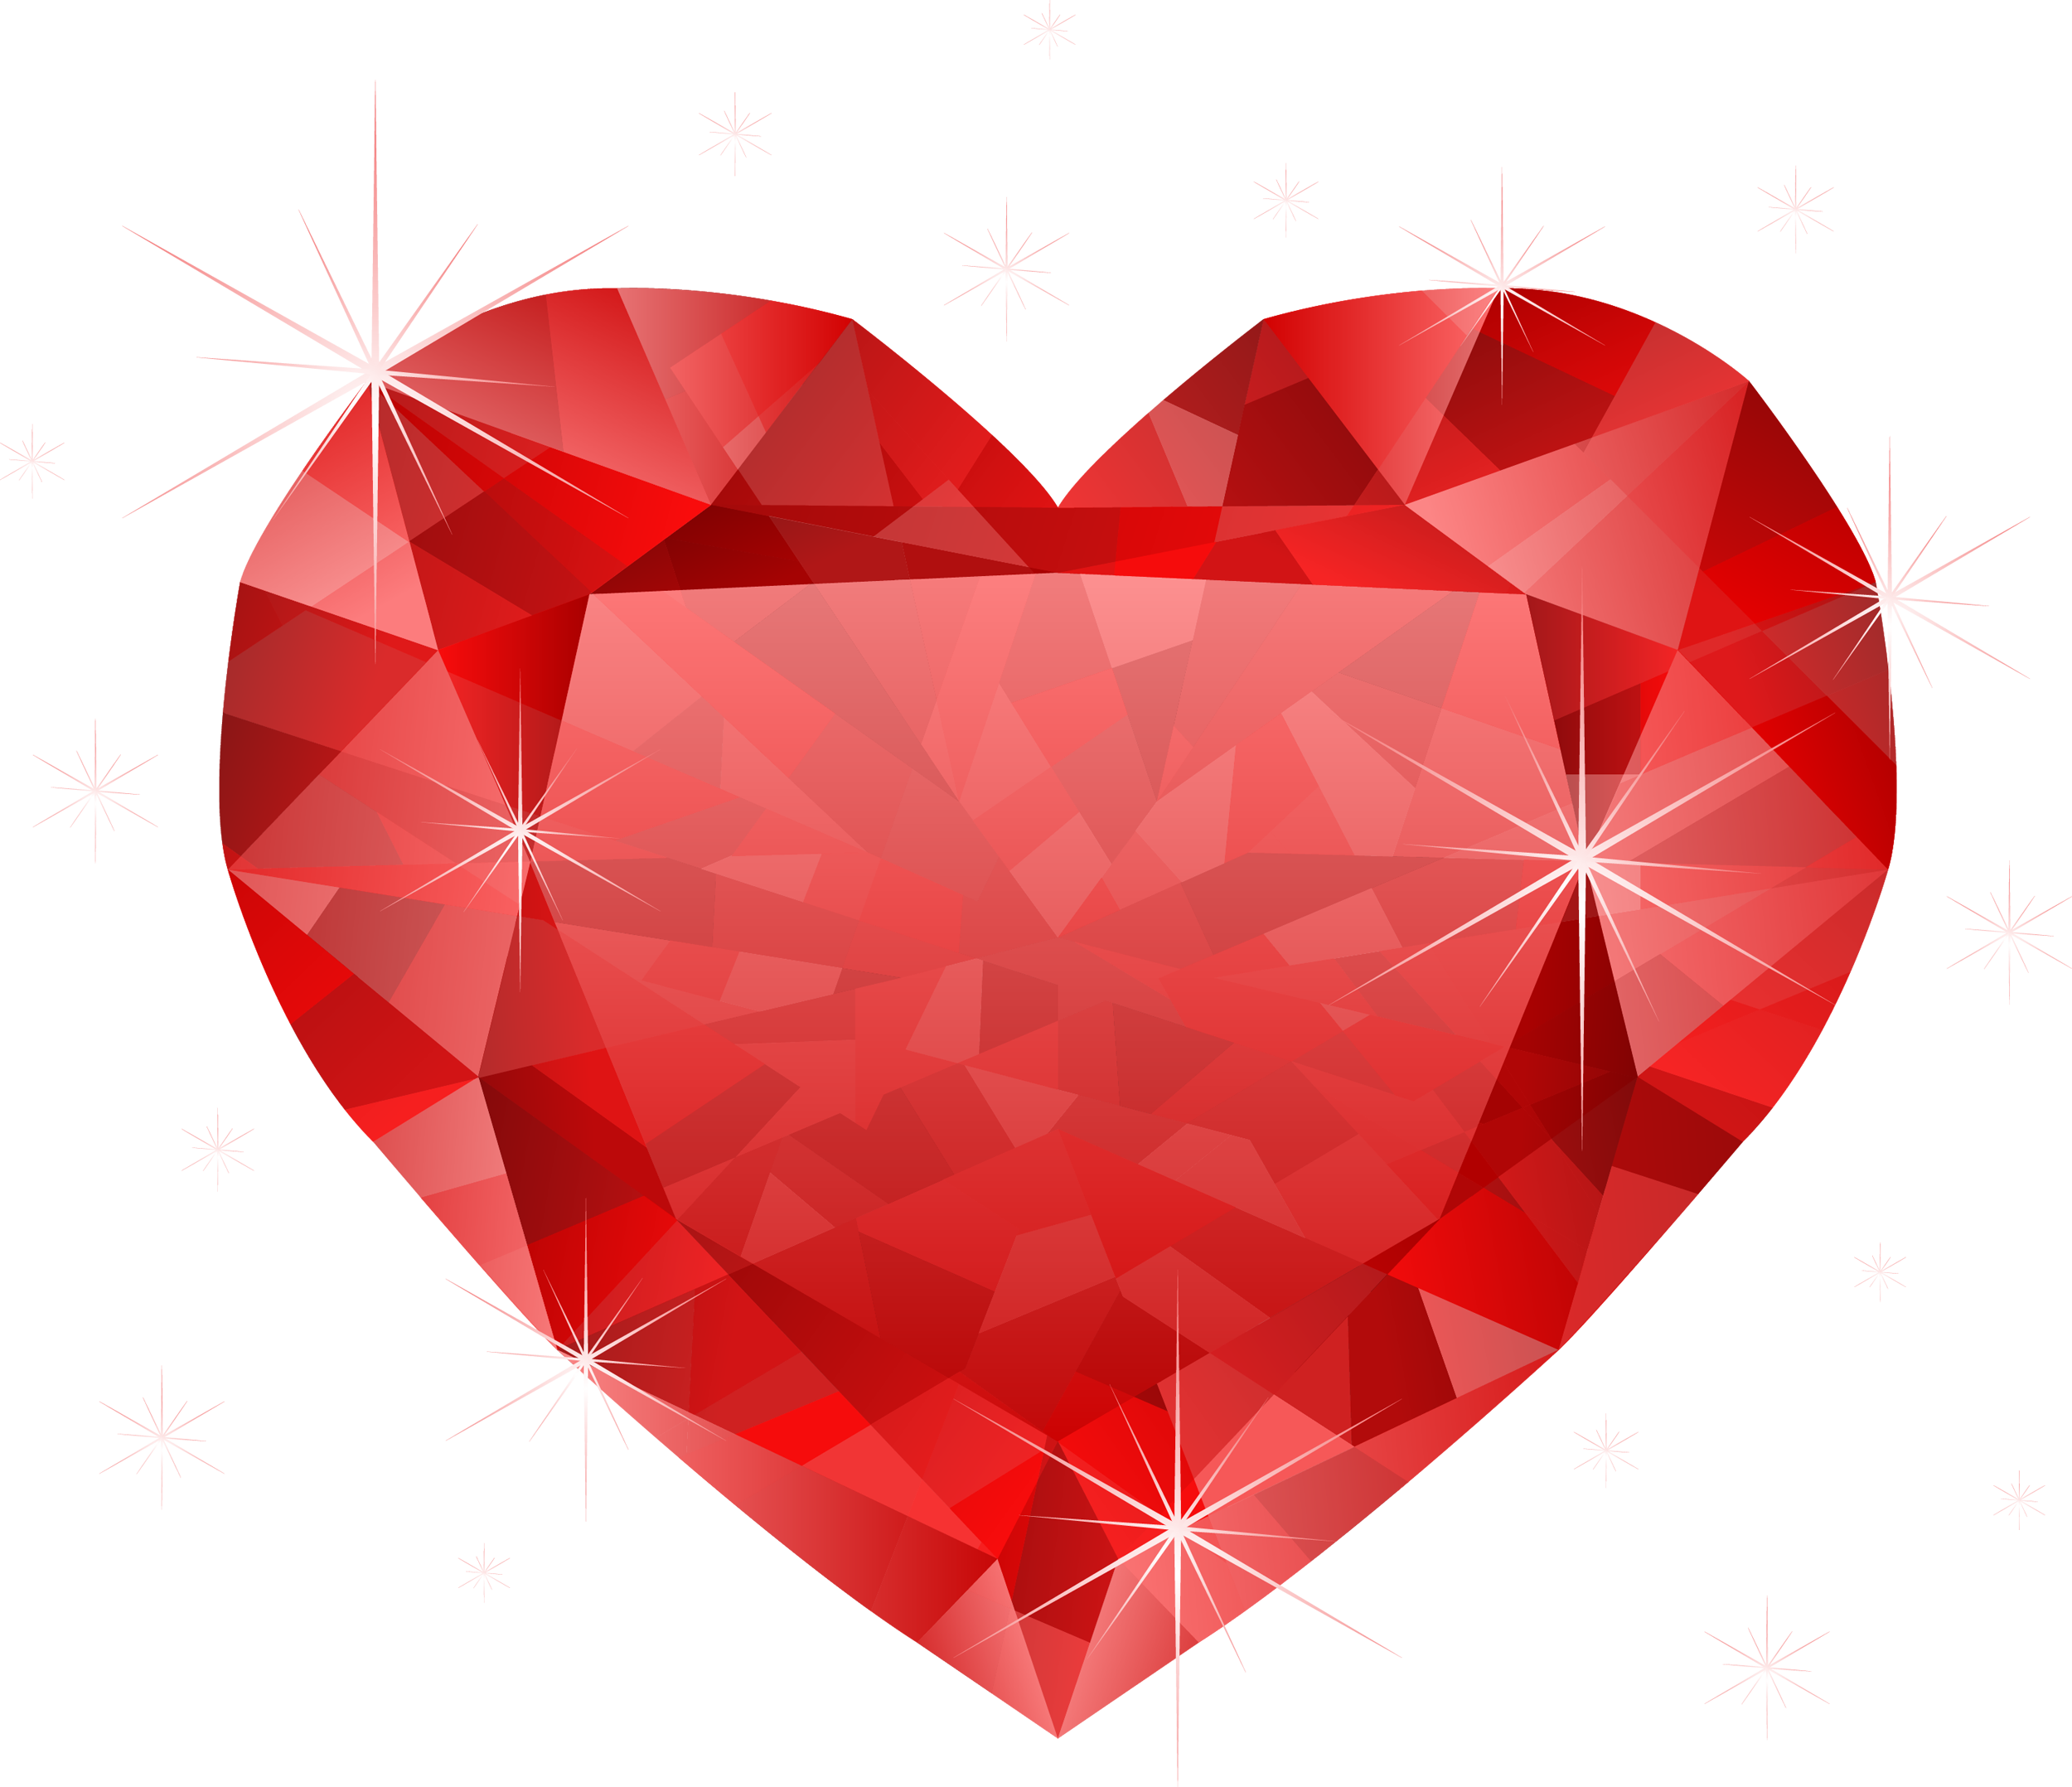 Heart Love Artwork Free Download Image PNG Image